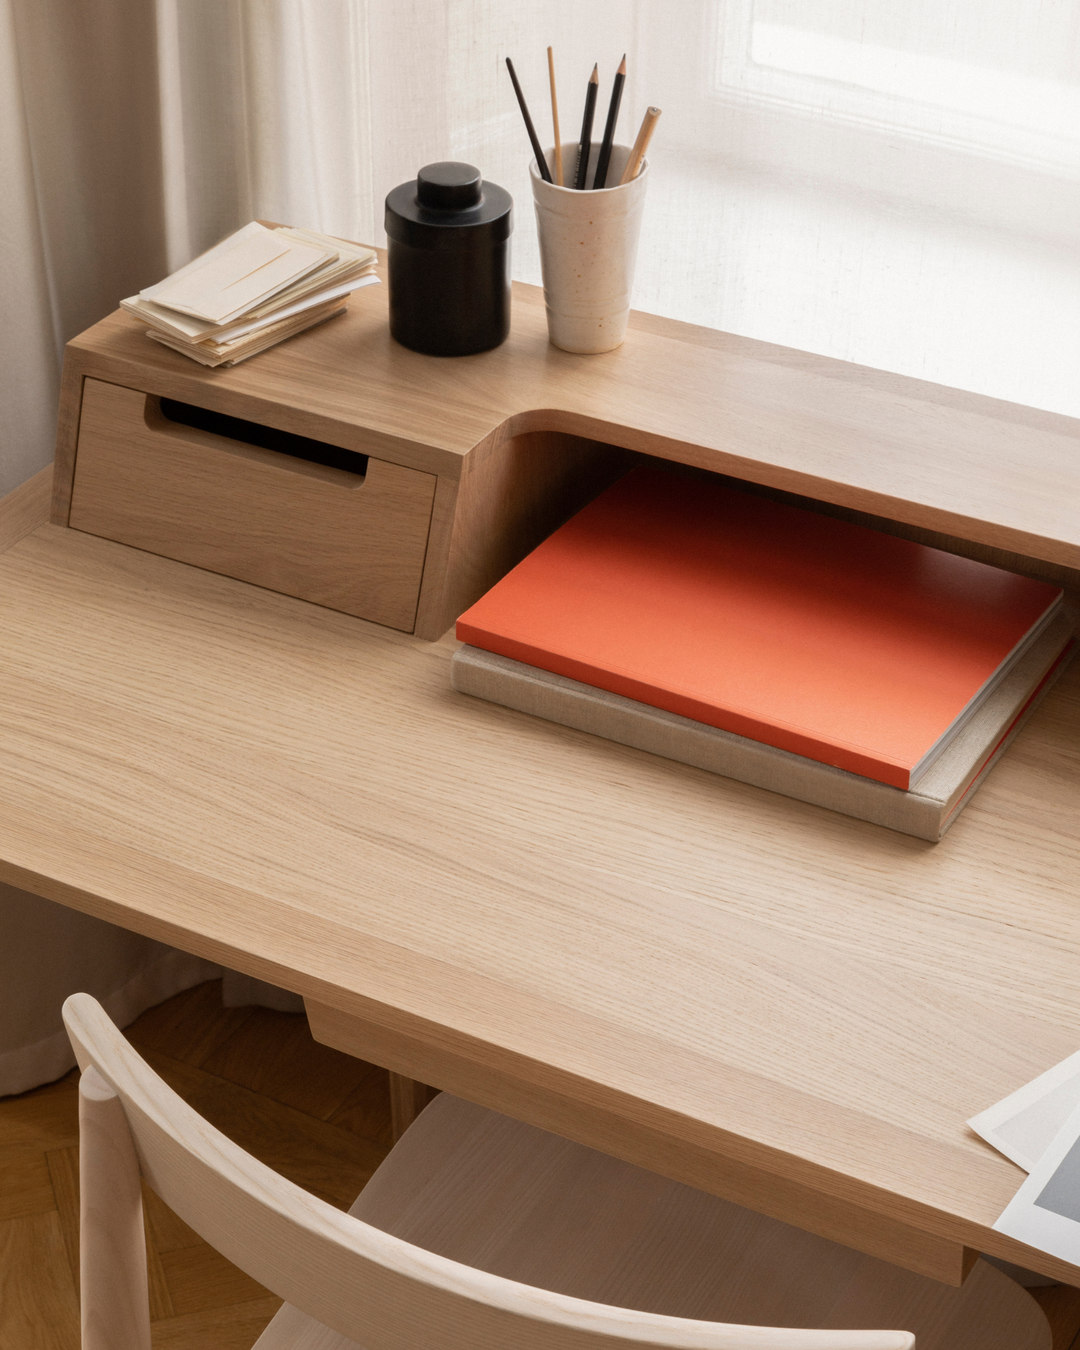 treviso-desk-oak-ercol-furniture-l.ercolani-designer-range-made-in-england-british-craftsmanship-mid-century-wok-station